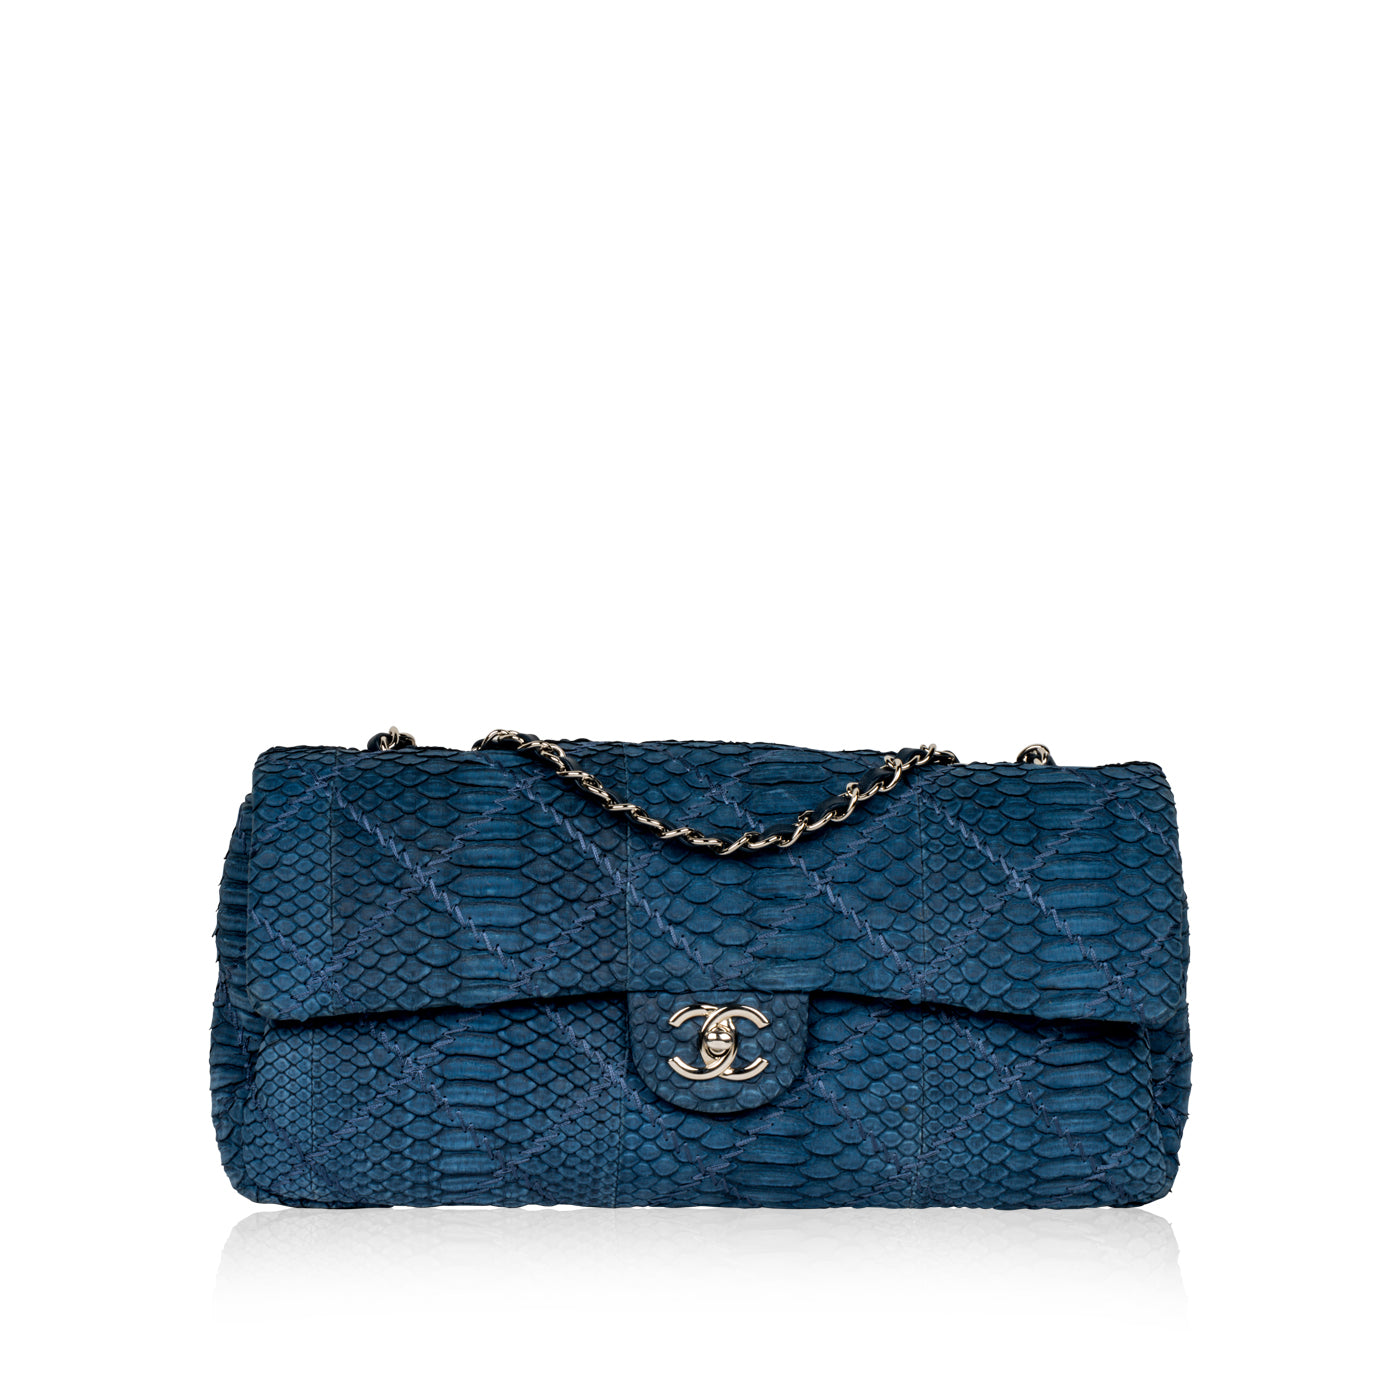 Chanel - Python Flap Bag - Blue - Pre-Loved